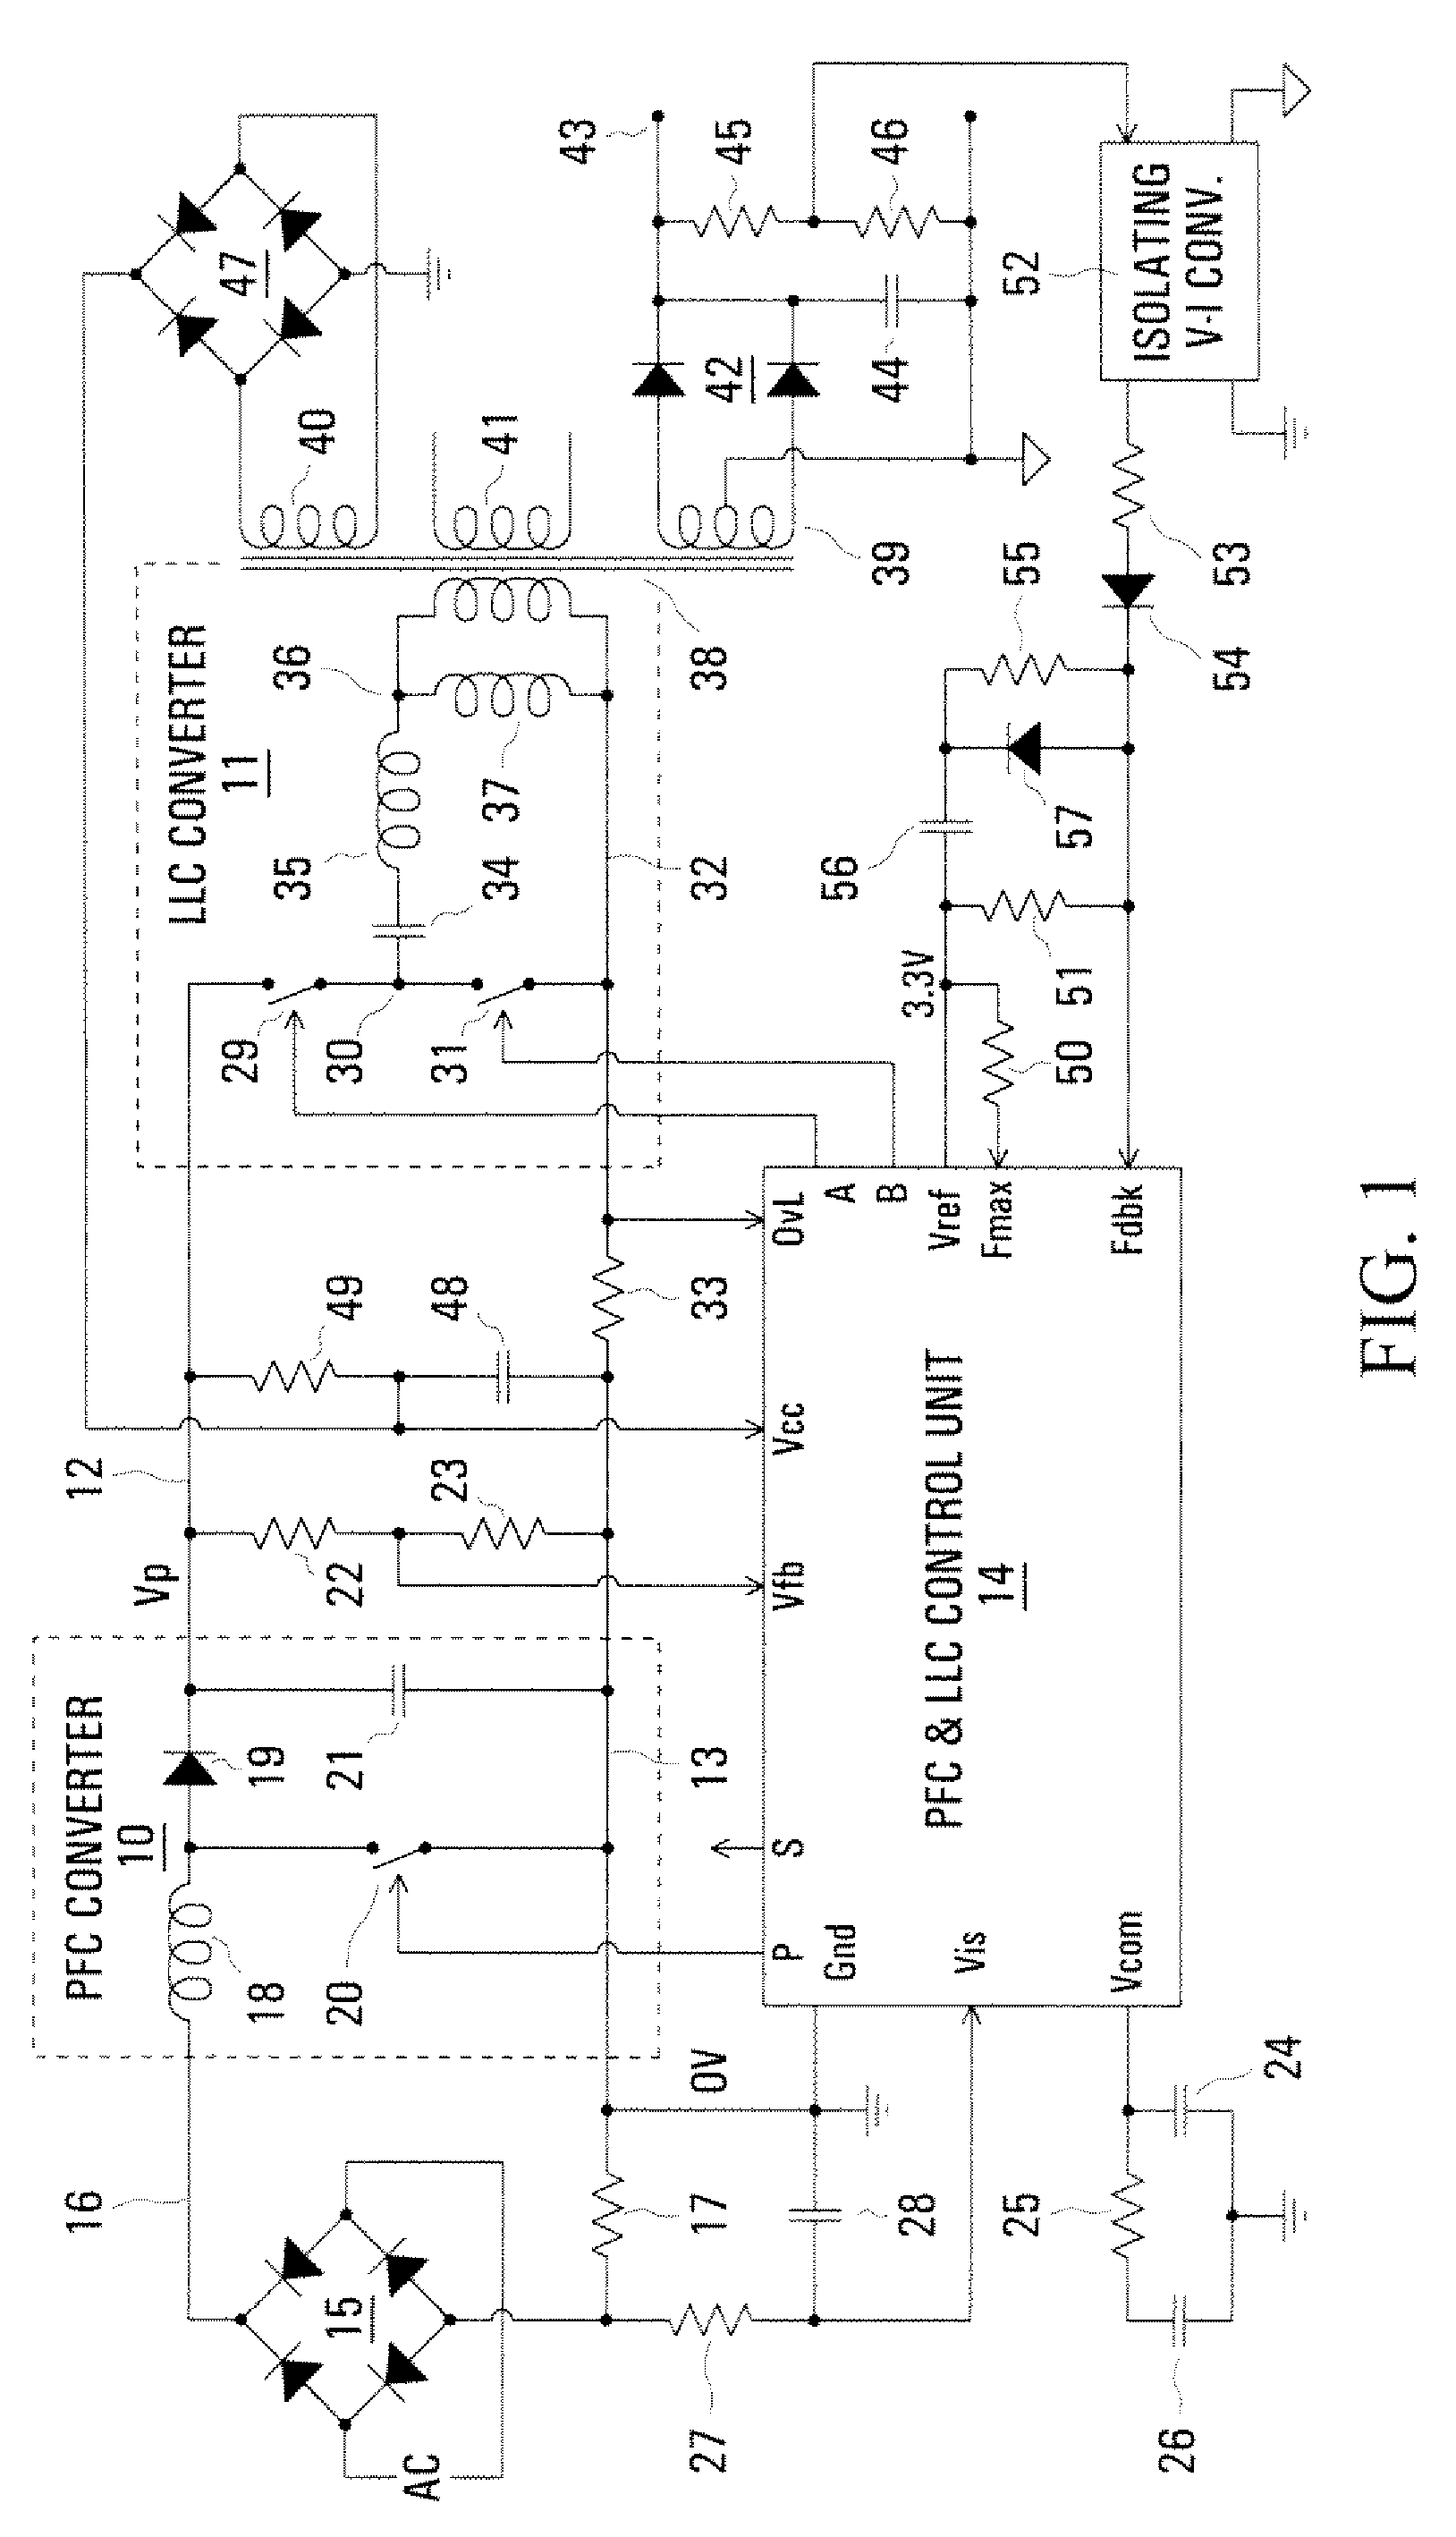 Control arrangement for a resonant mode power converter